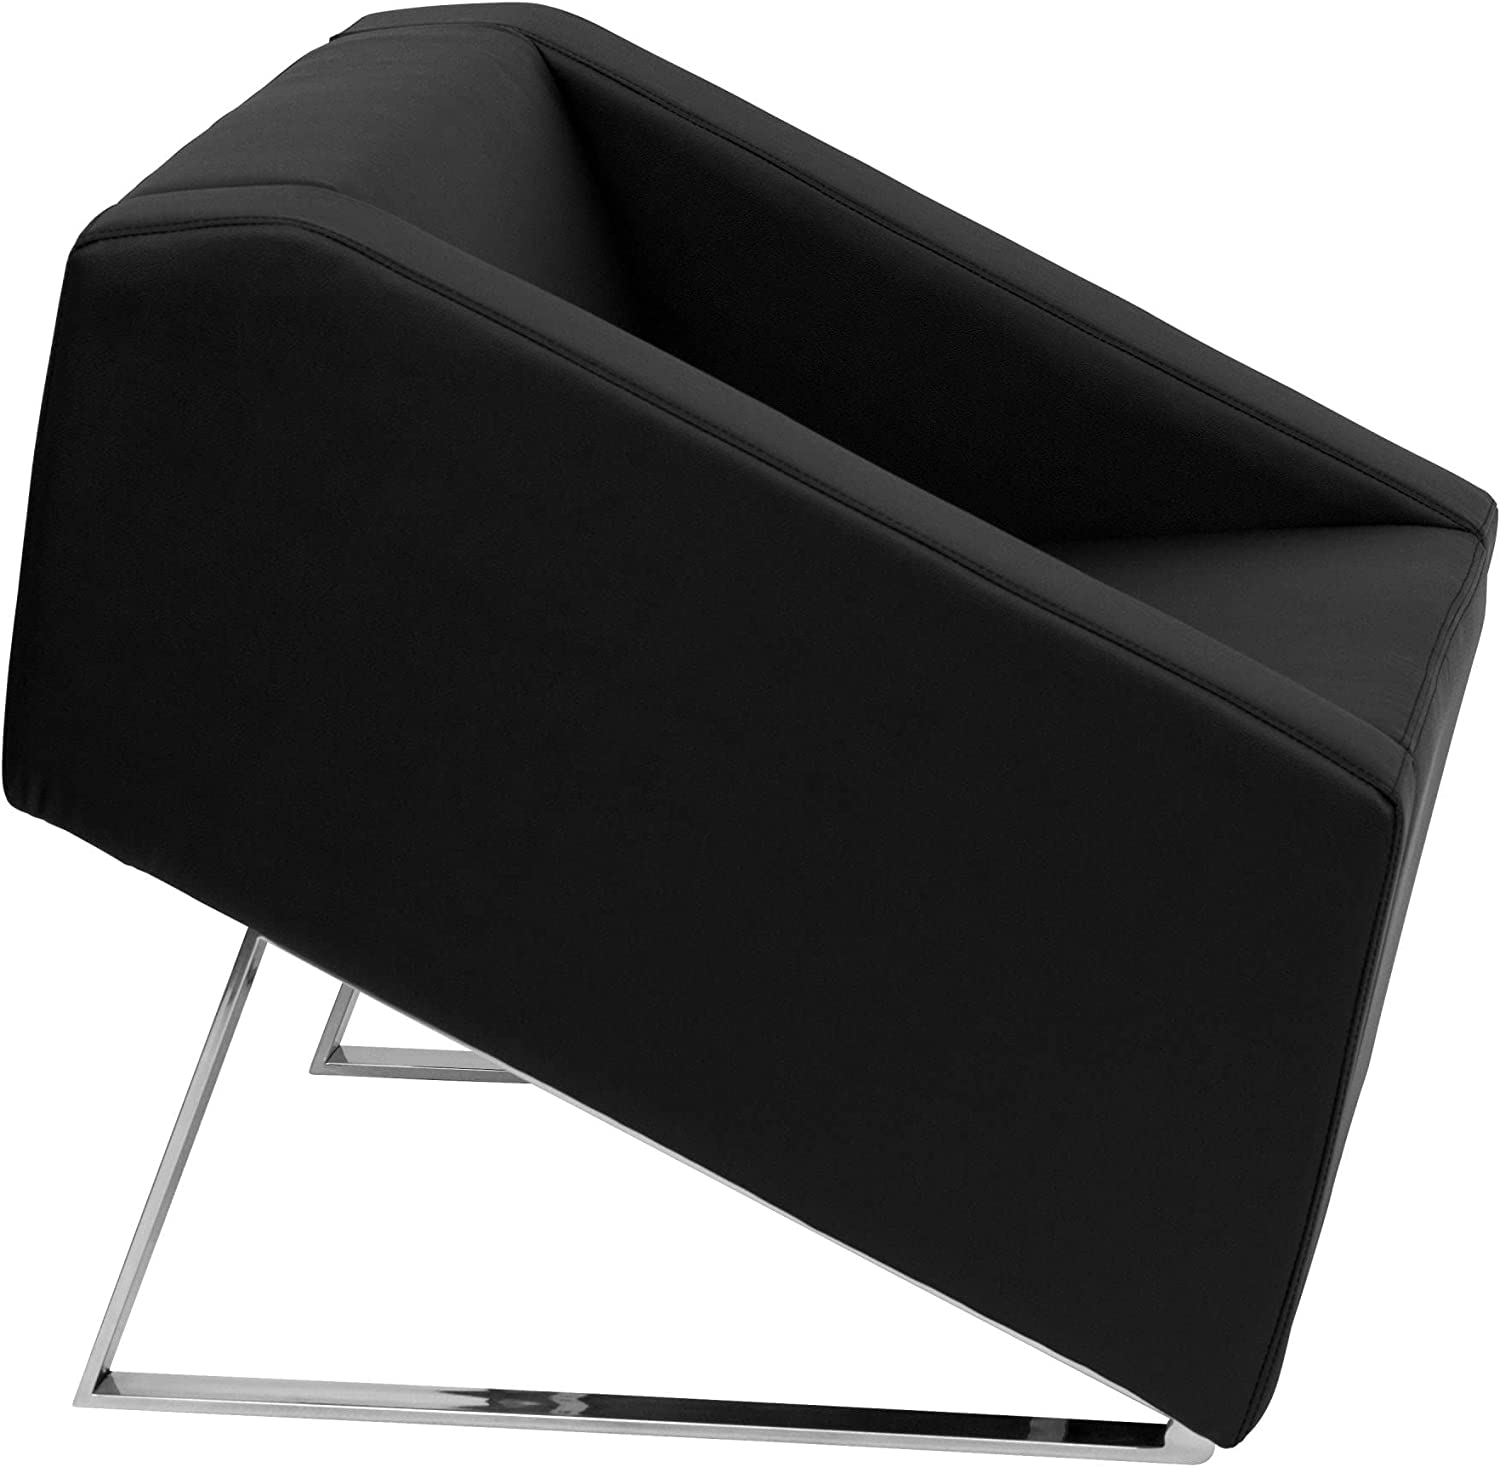 Flash Furniture HERCULES Smart Series Black LeatherSoft Lounge Chair